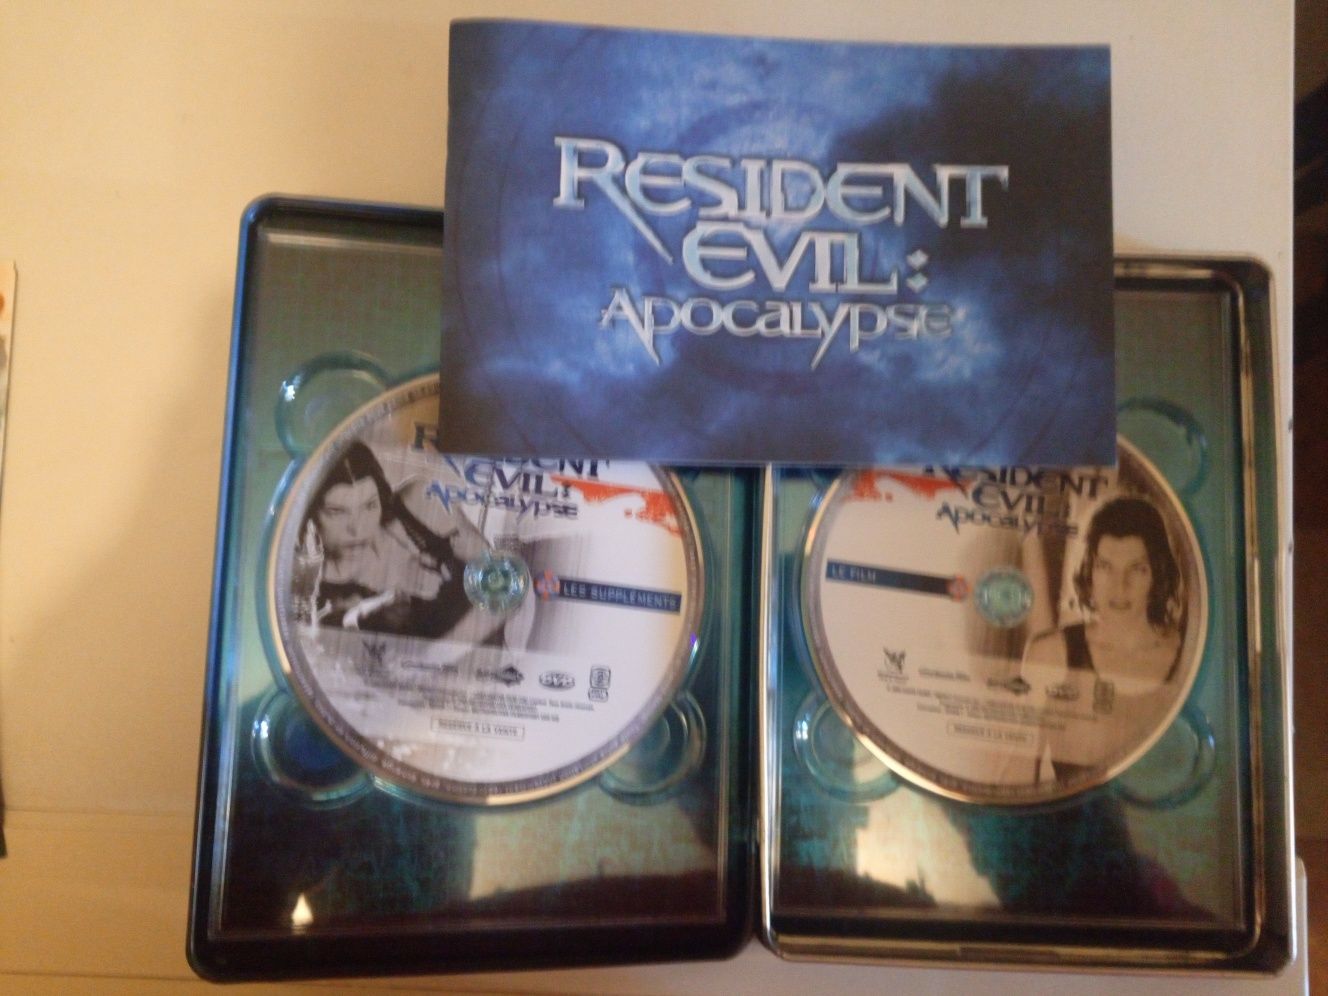 Steelbook DVD Resident evil Apocalypse